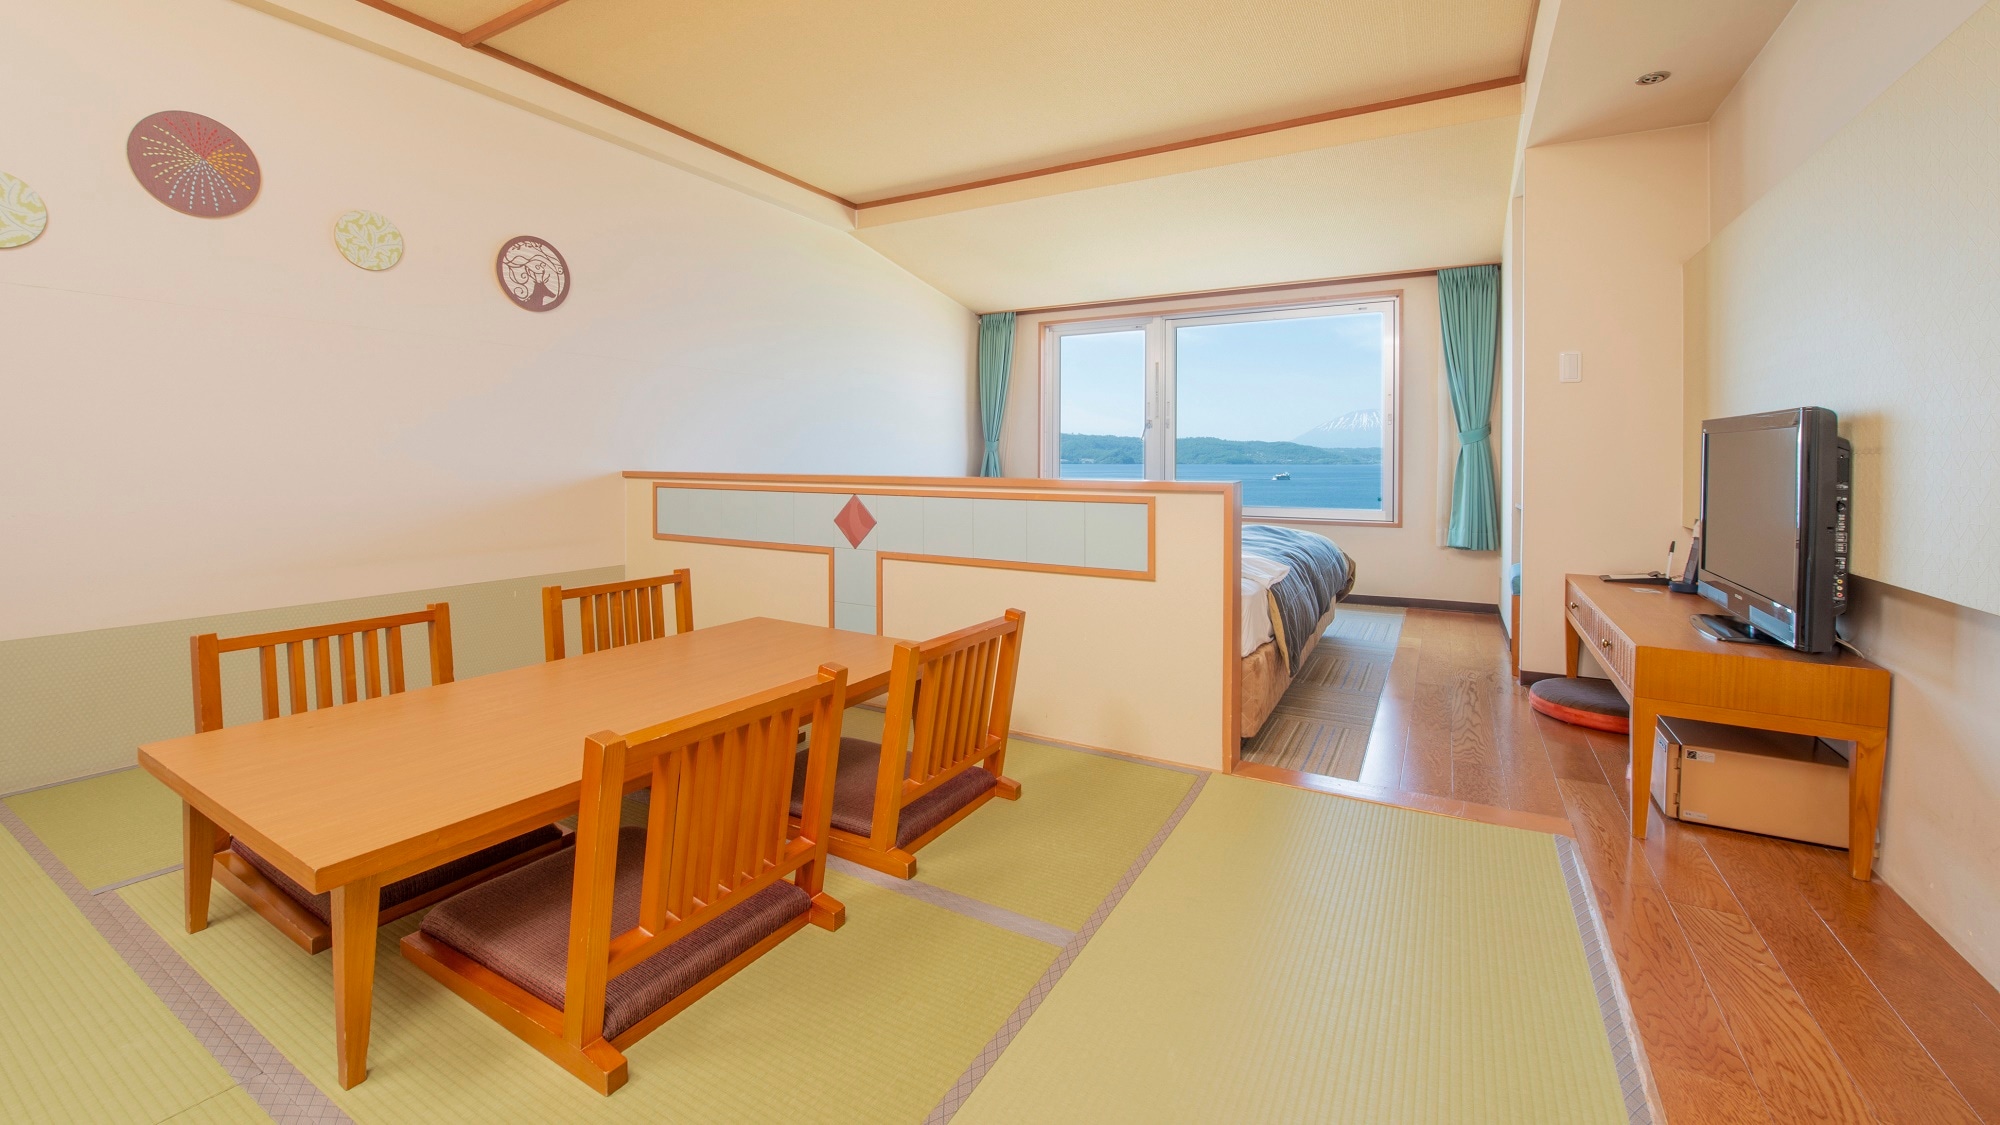 [Gedung Barat / Kamar Jepang / Barat] Tersedia dua jenis kamar: kamar dengan tempat tidur di ambang jendela yang menghadap ke Danau Toya dan kamar dengan ruang tikar tatami.